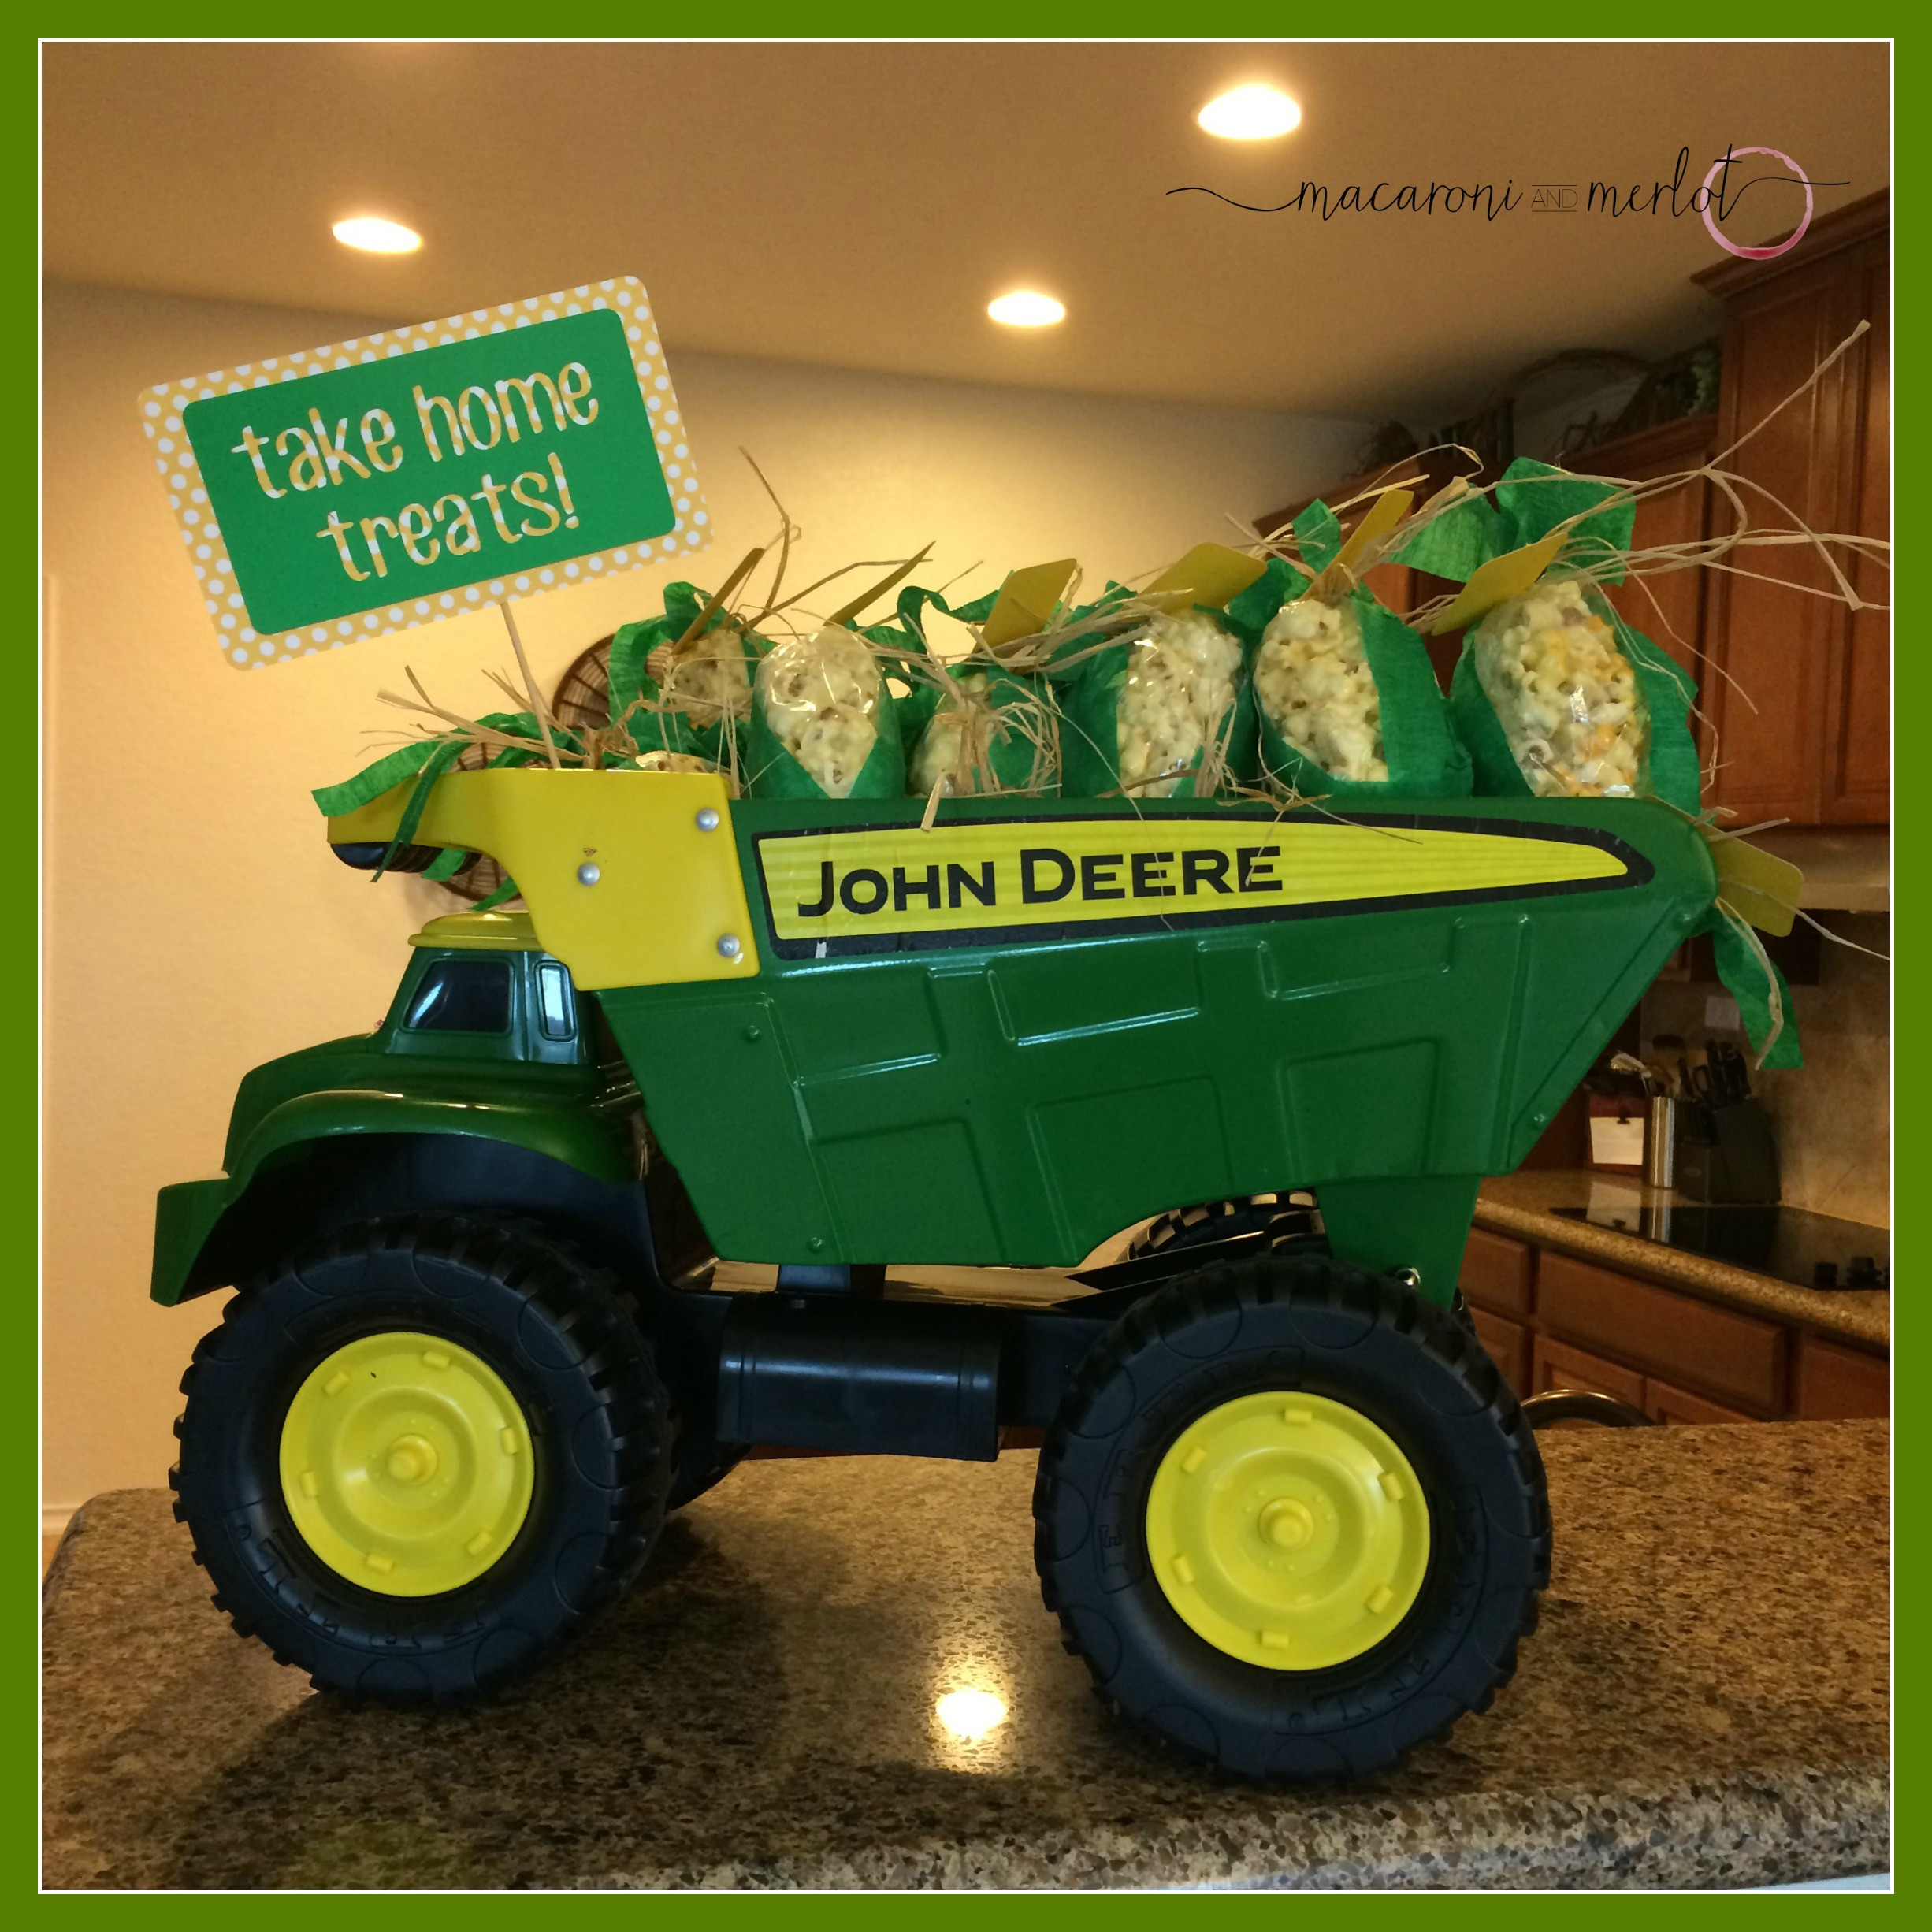 John Deere Birthday Party Supplies
 John Deere Birthday Party – macaroni and merlot